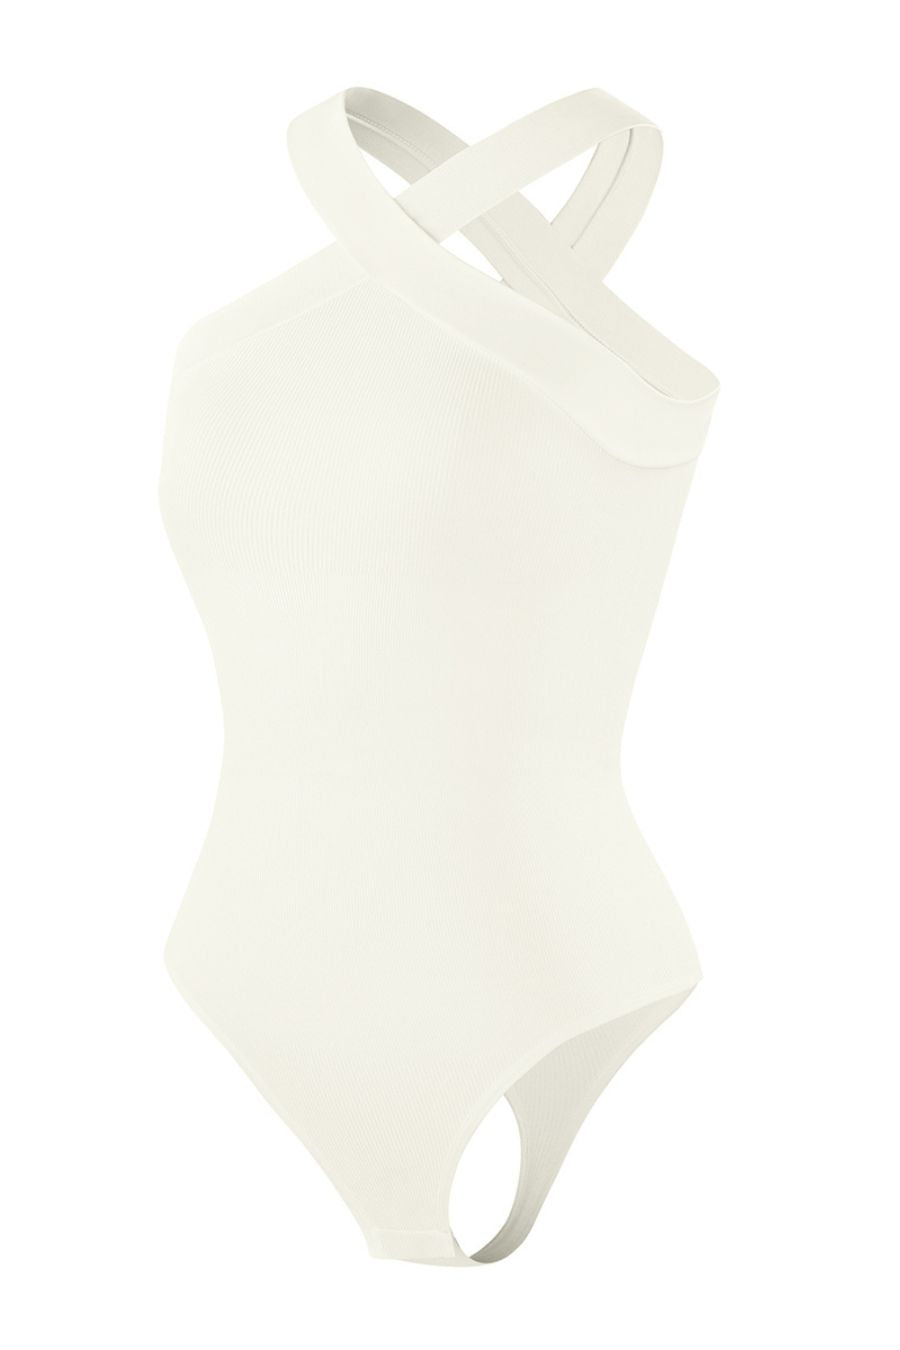 Electra Sculpting Bodysuit - White Contour Clothing